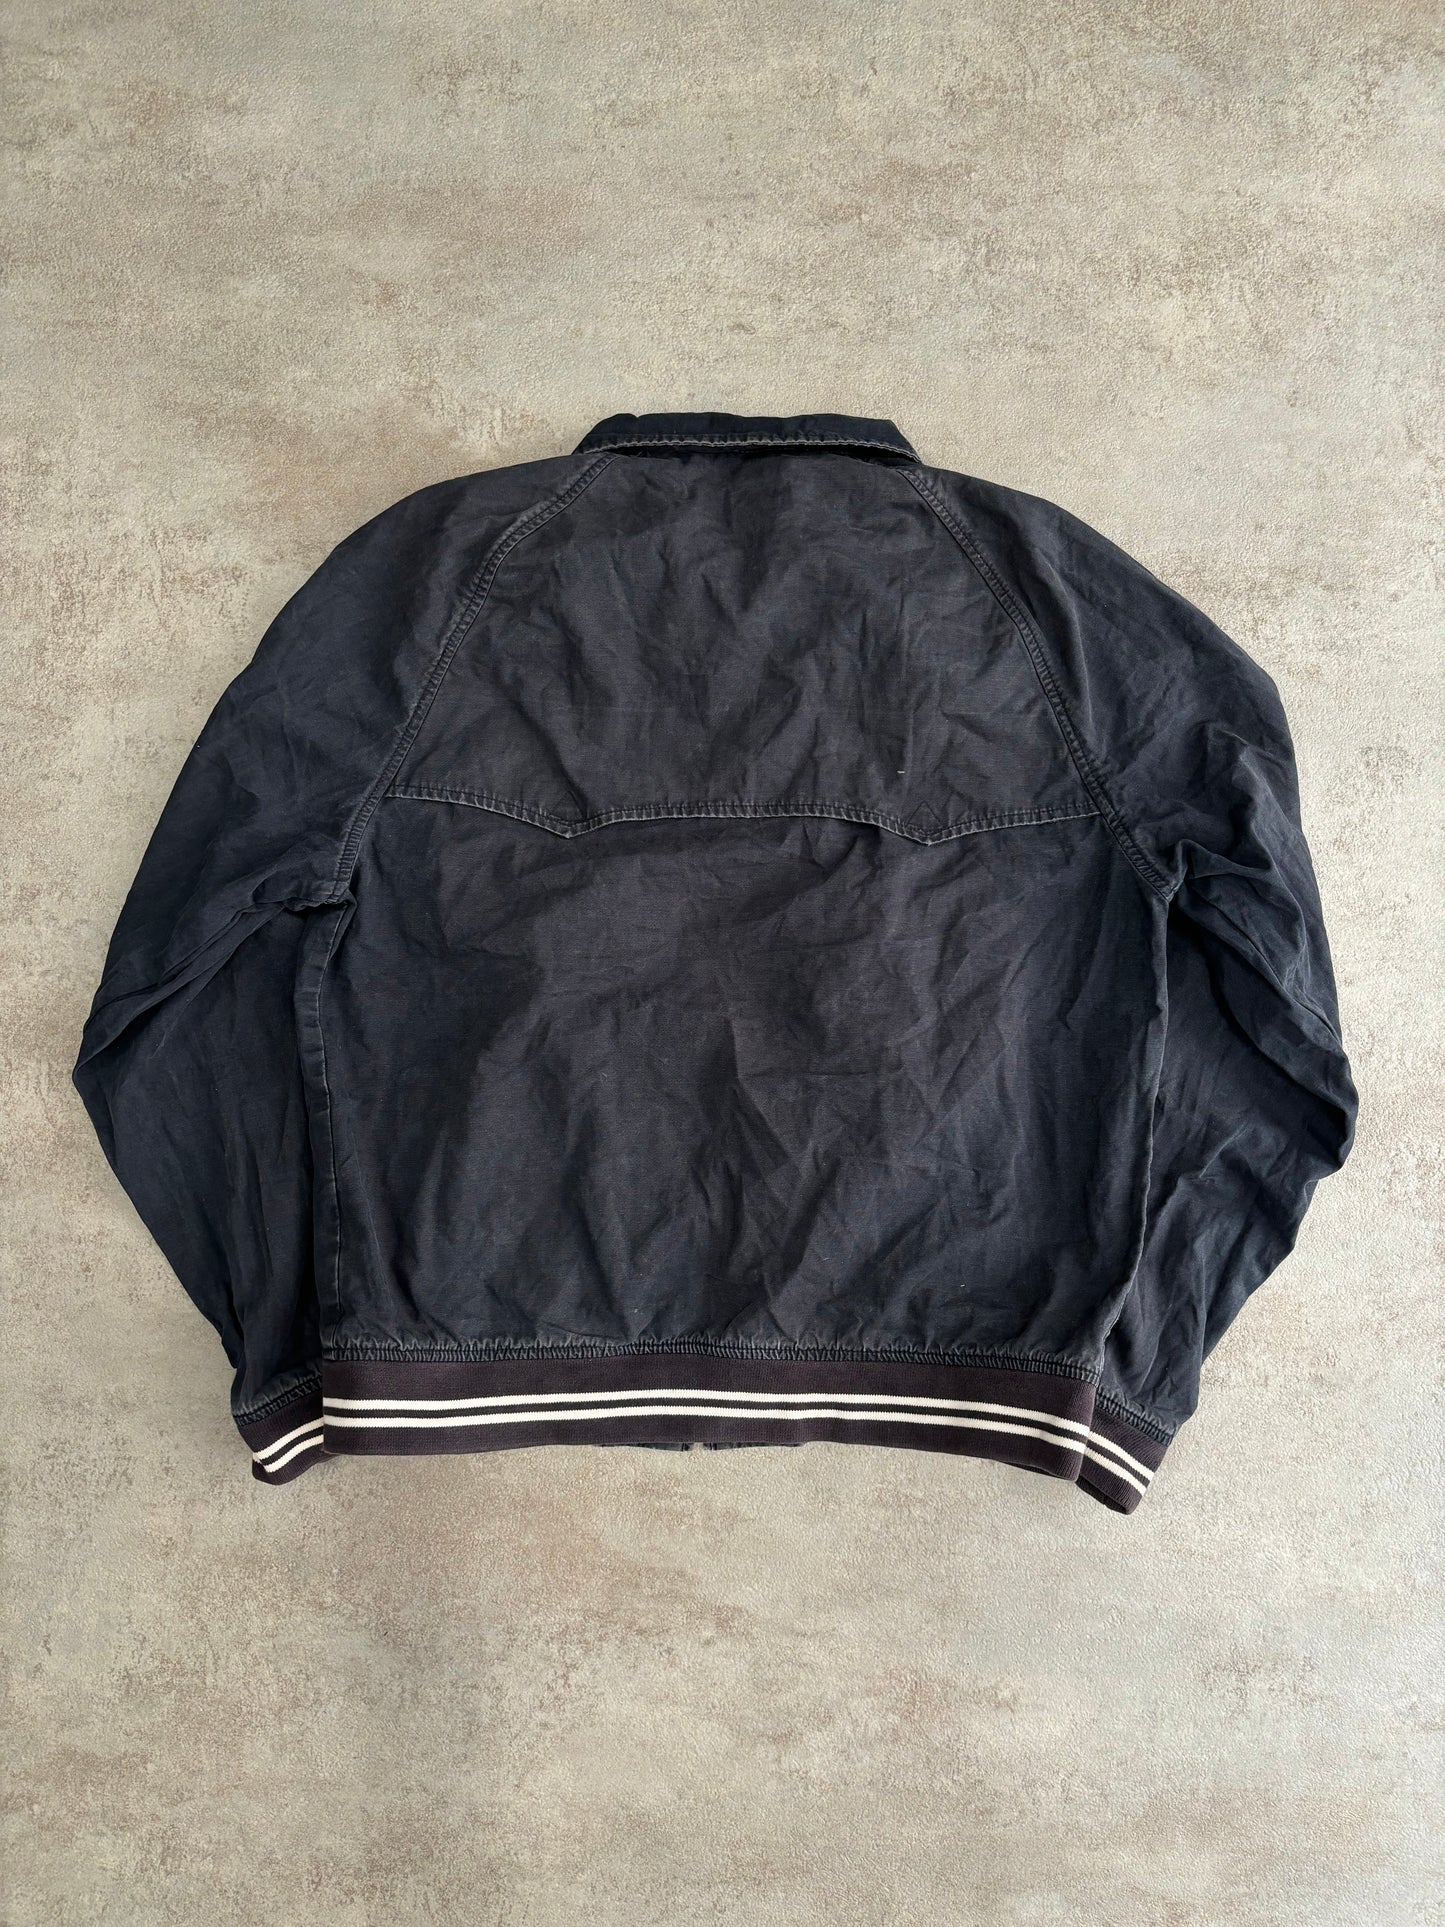 Polo Ralph Lauren 90s Vintage Harrington Jacket - S